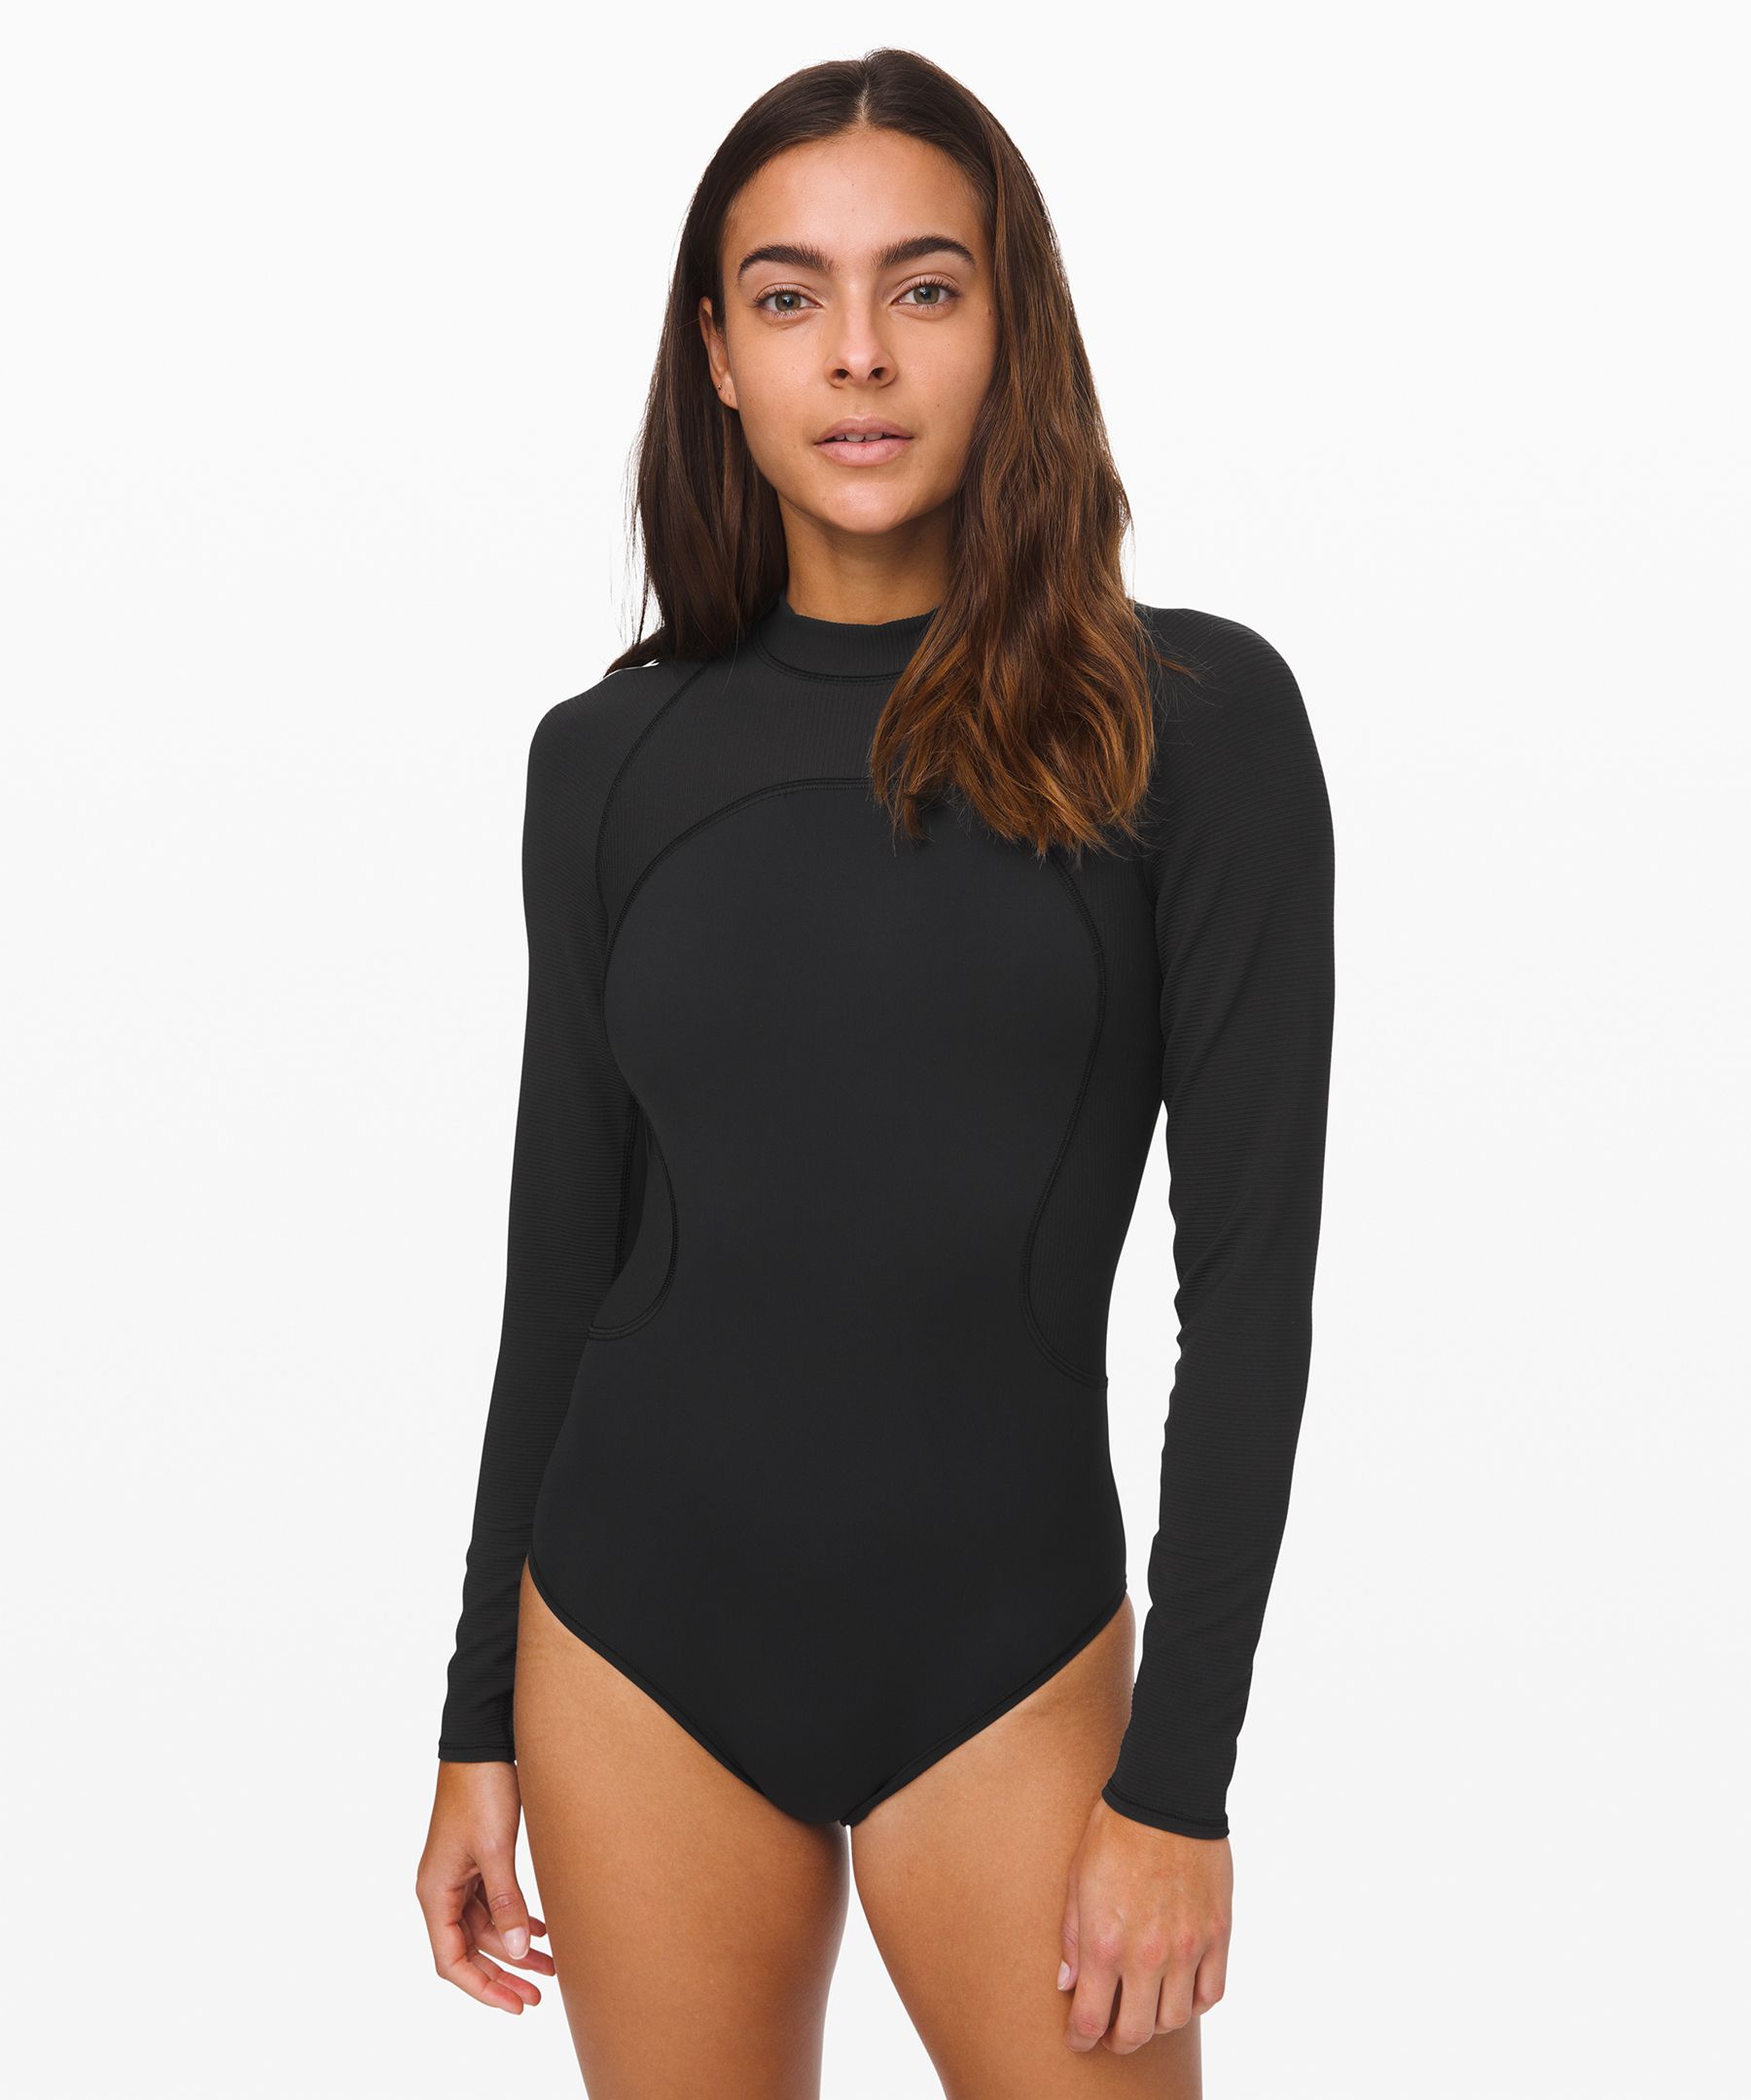 Long-Sleeve Zip-Back Paddle Suit, Swimwear